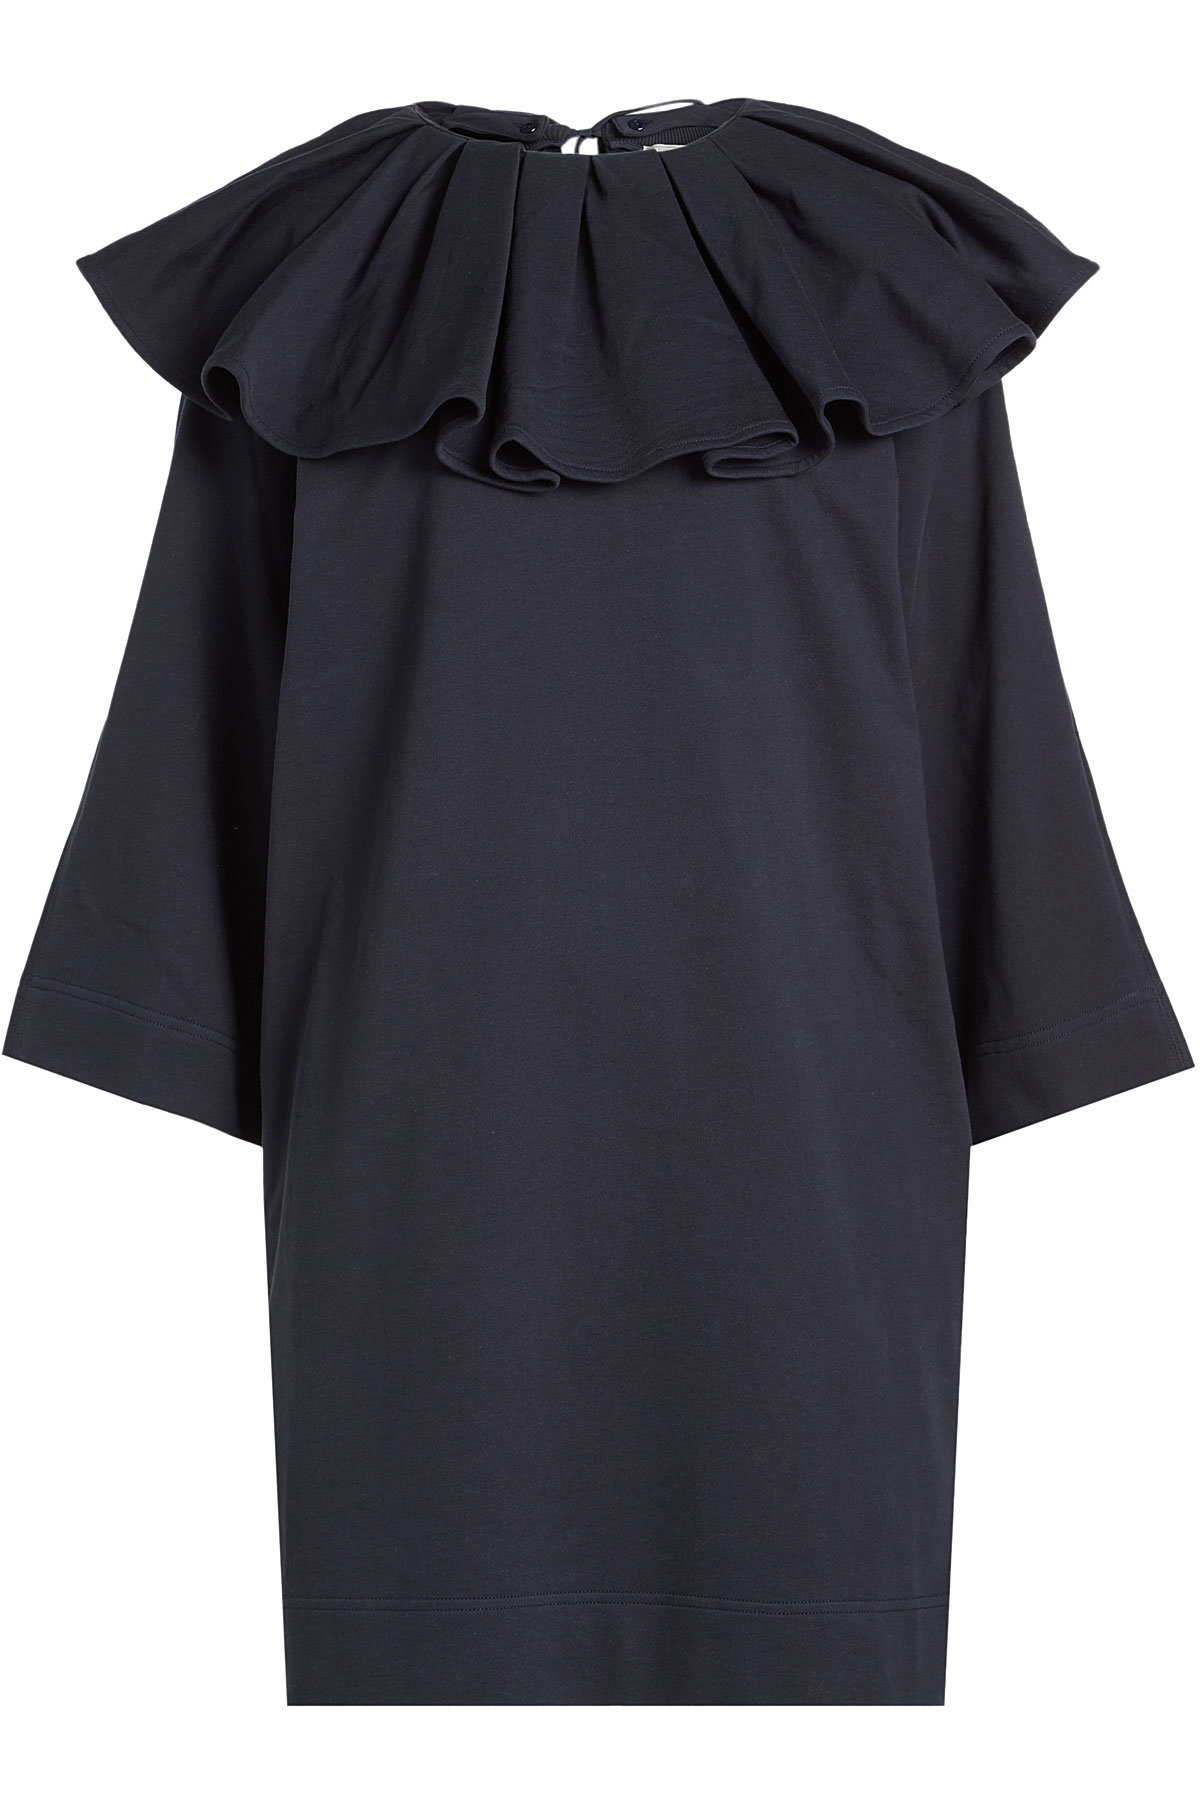 Nina Ricci - Jersey Dress with Ruffled Collar